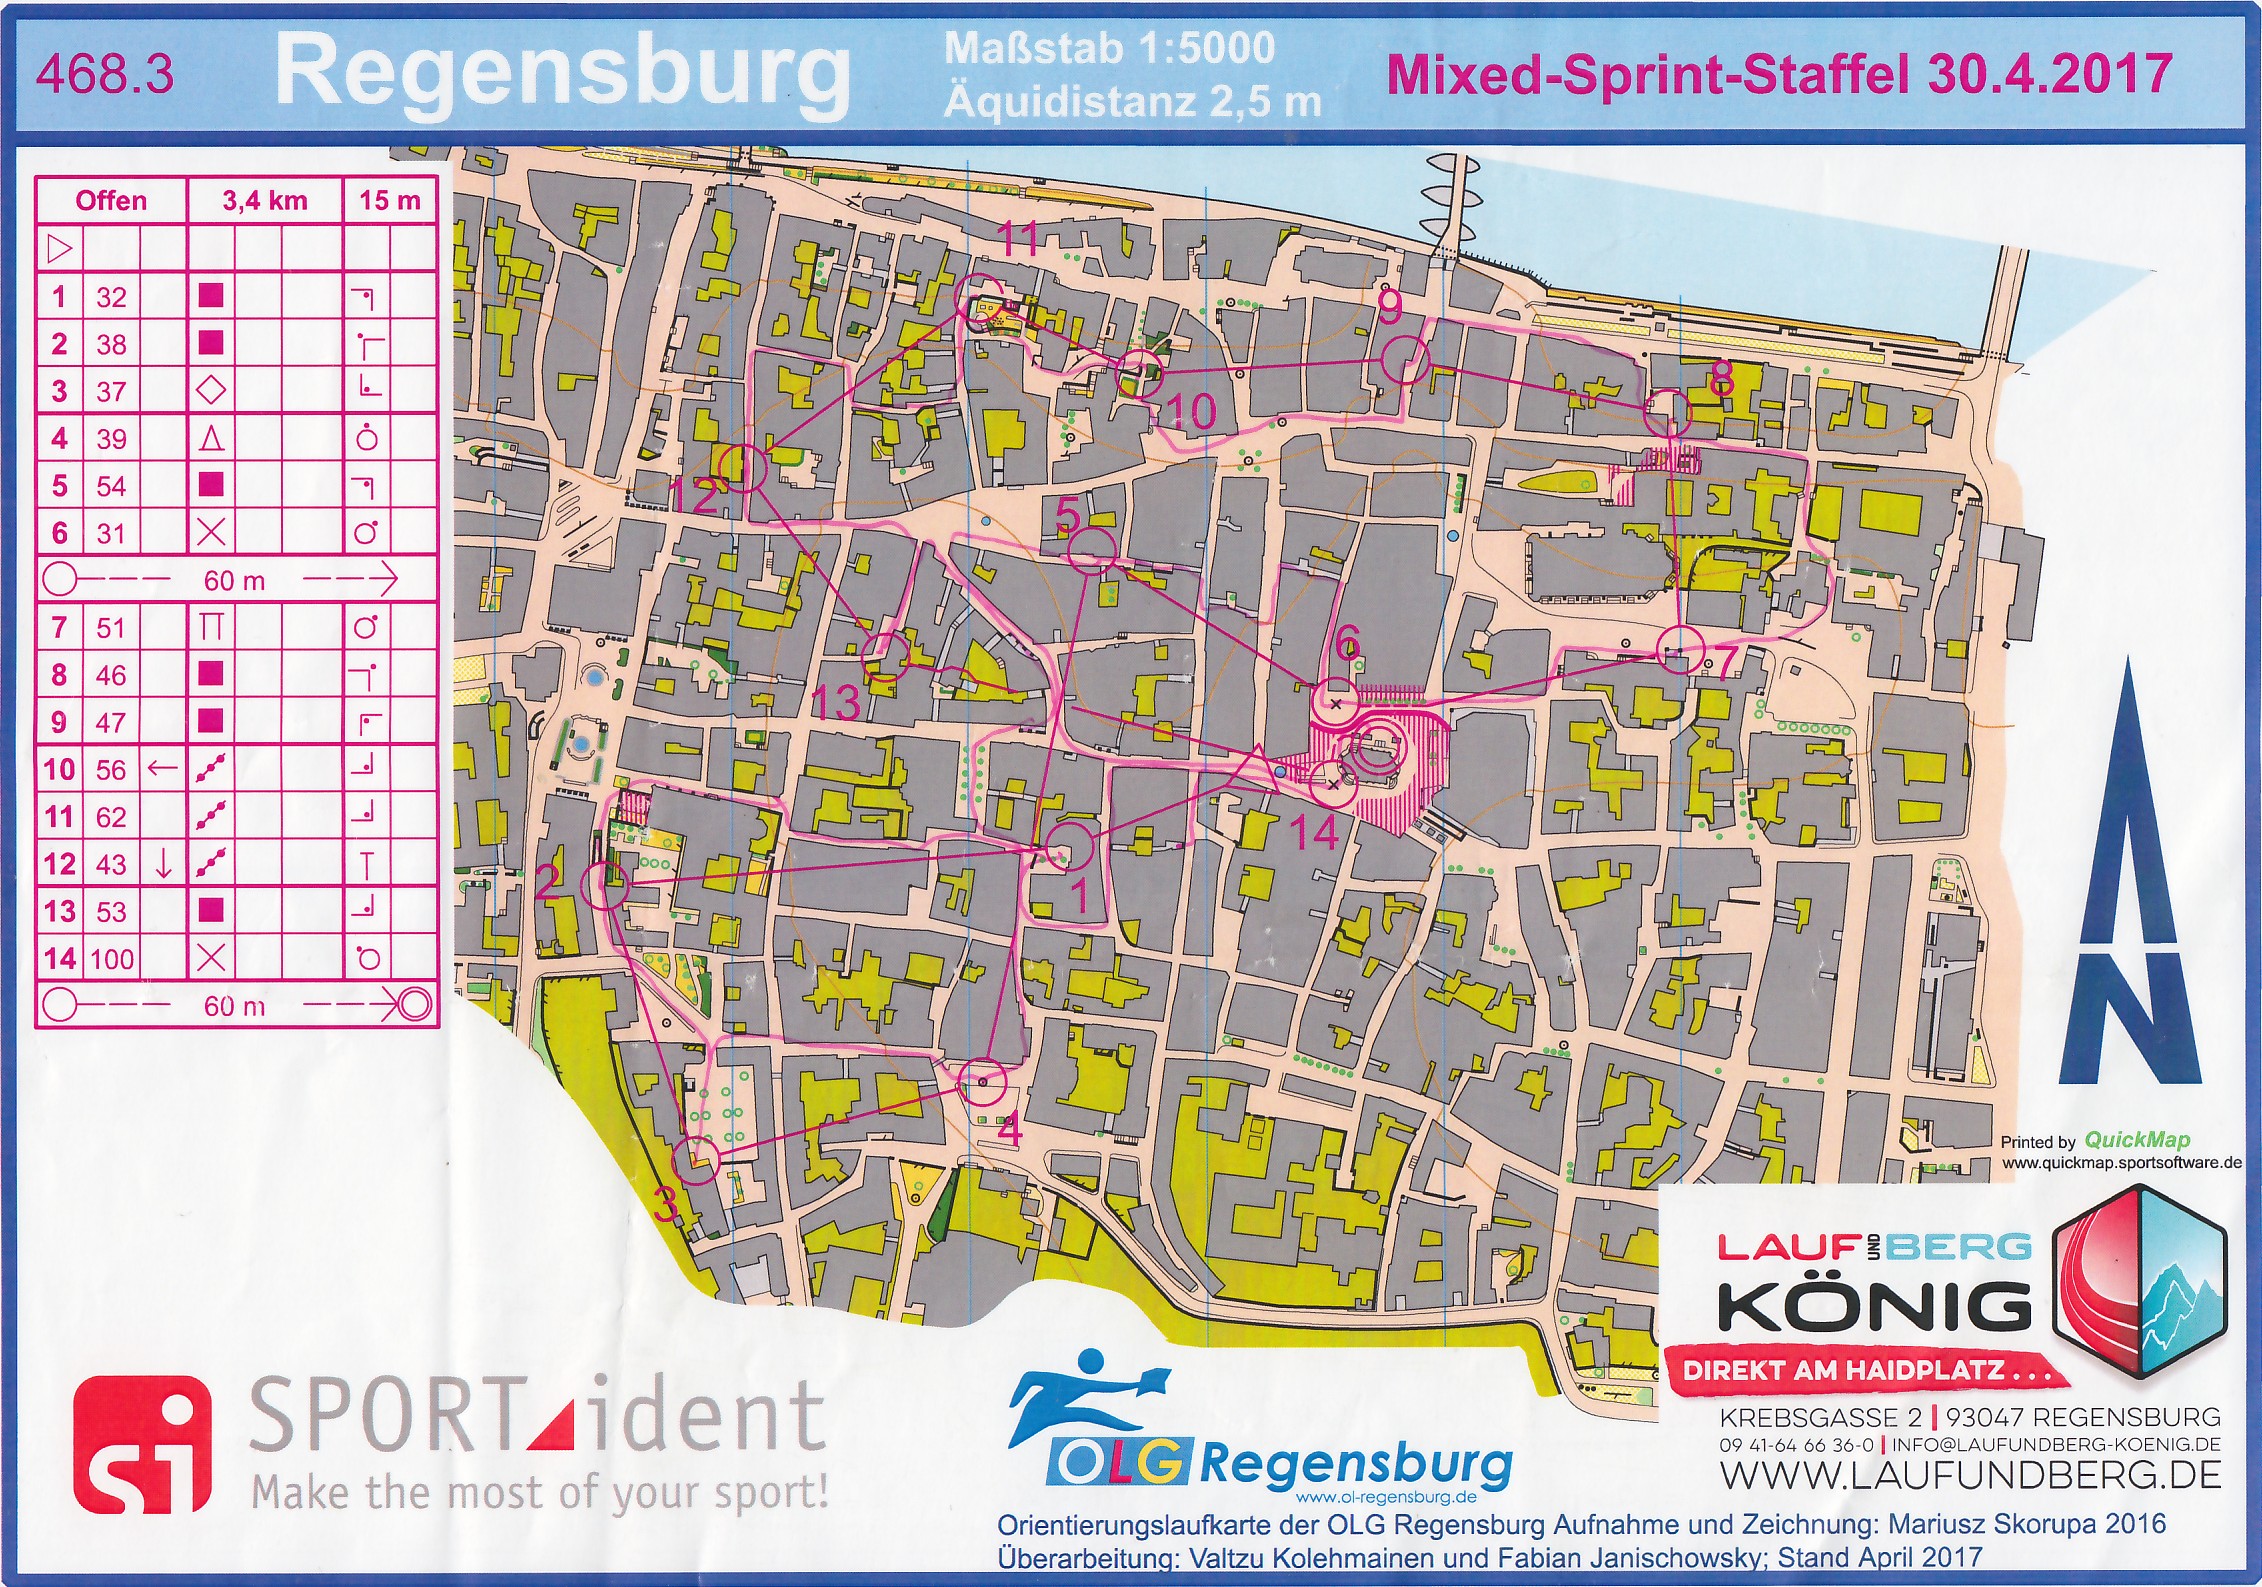 Sprint-Staffel in Regensburg (30.04.2017)